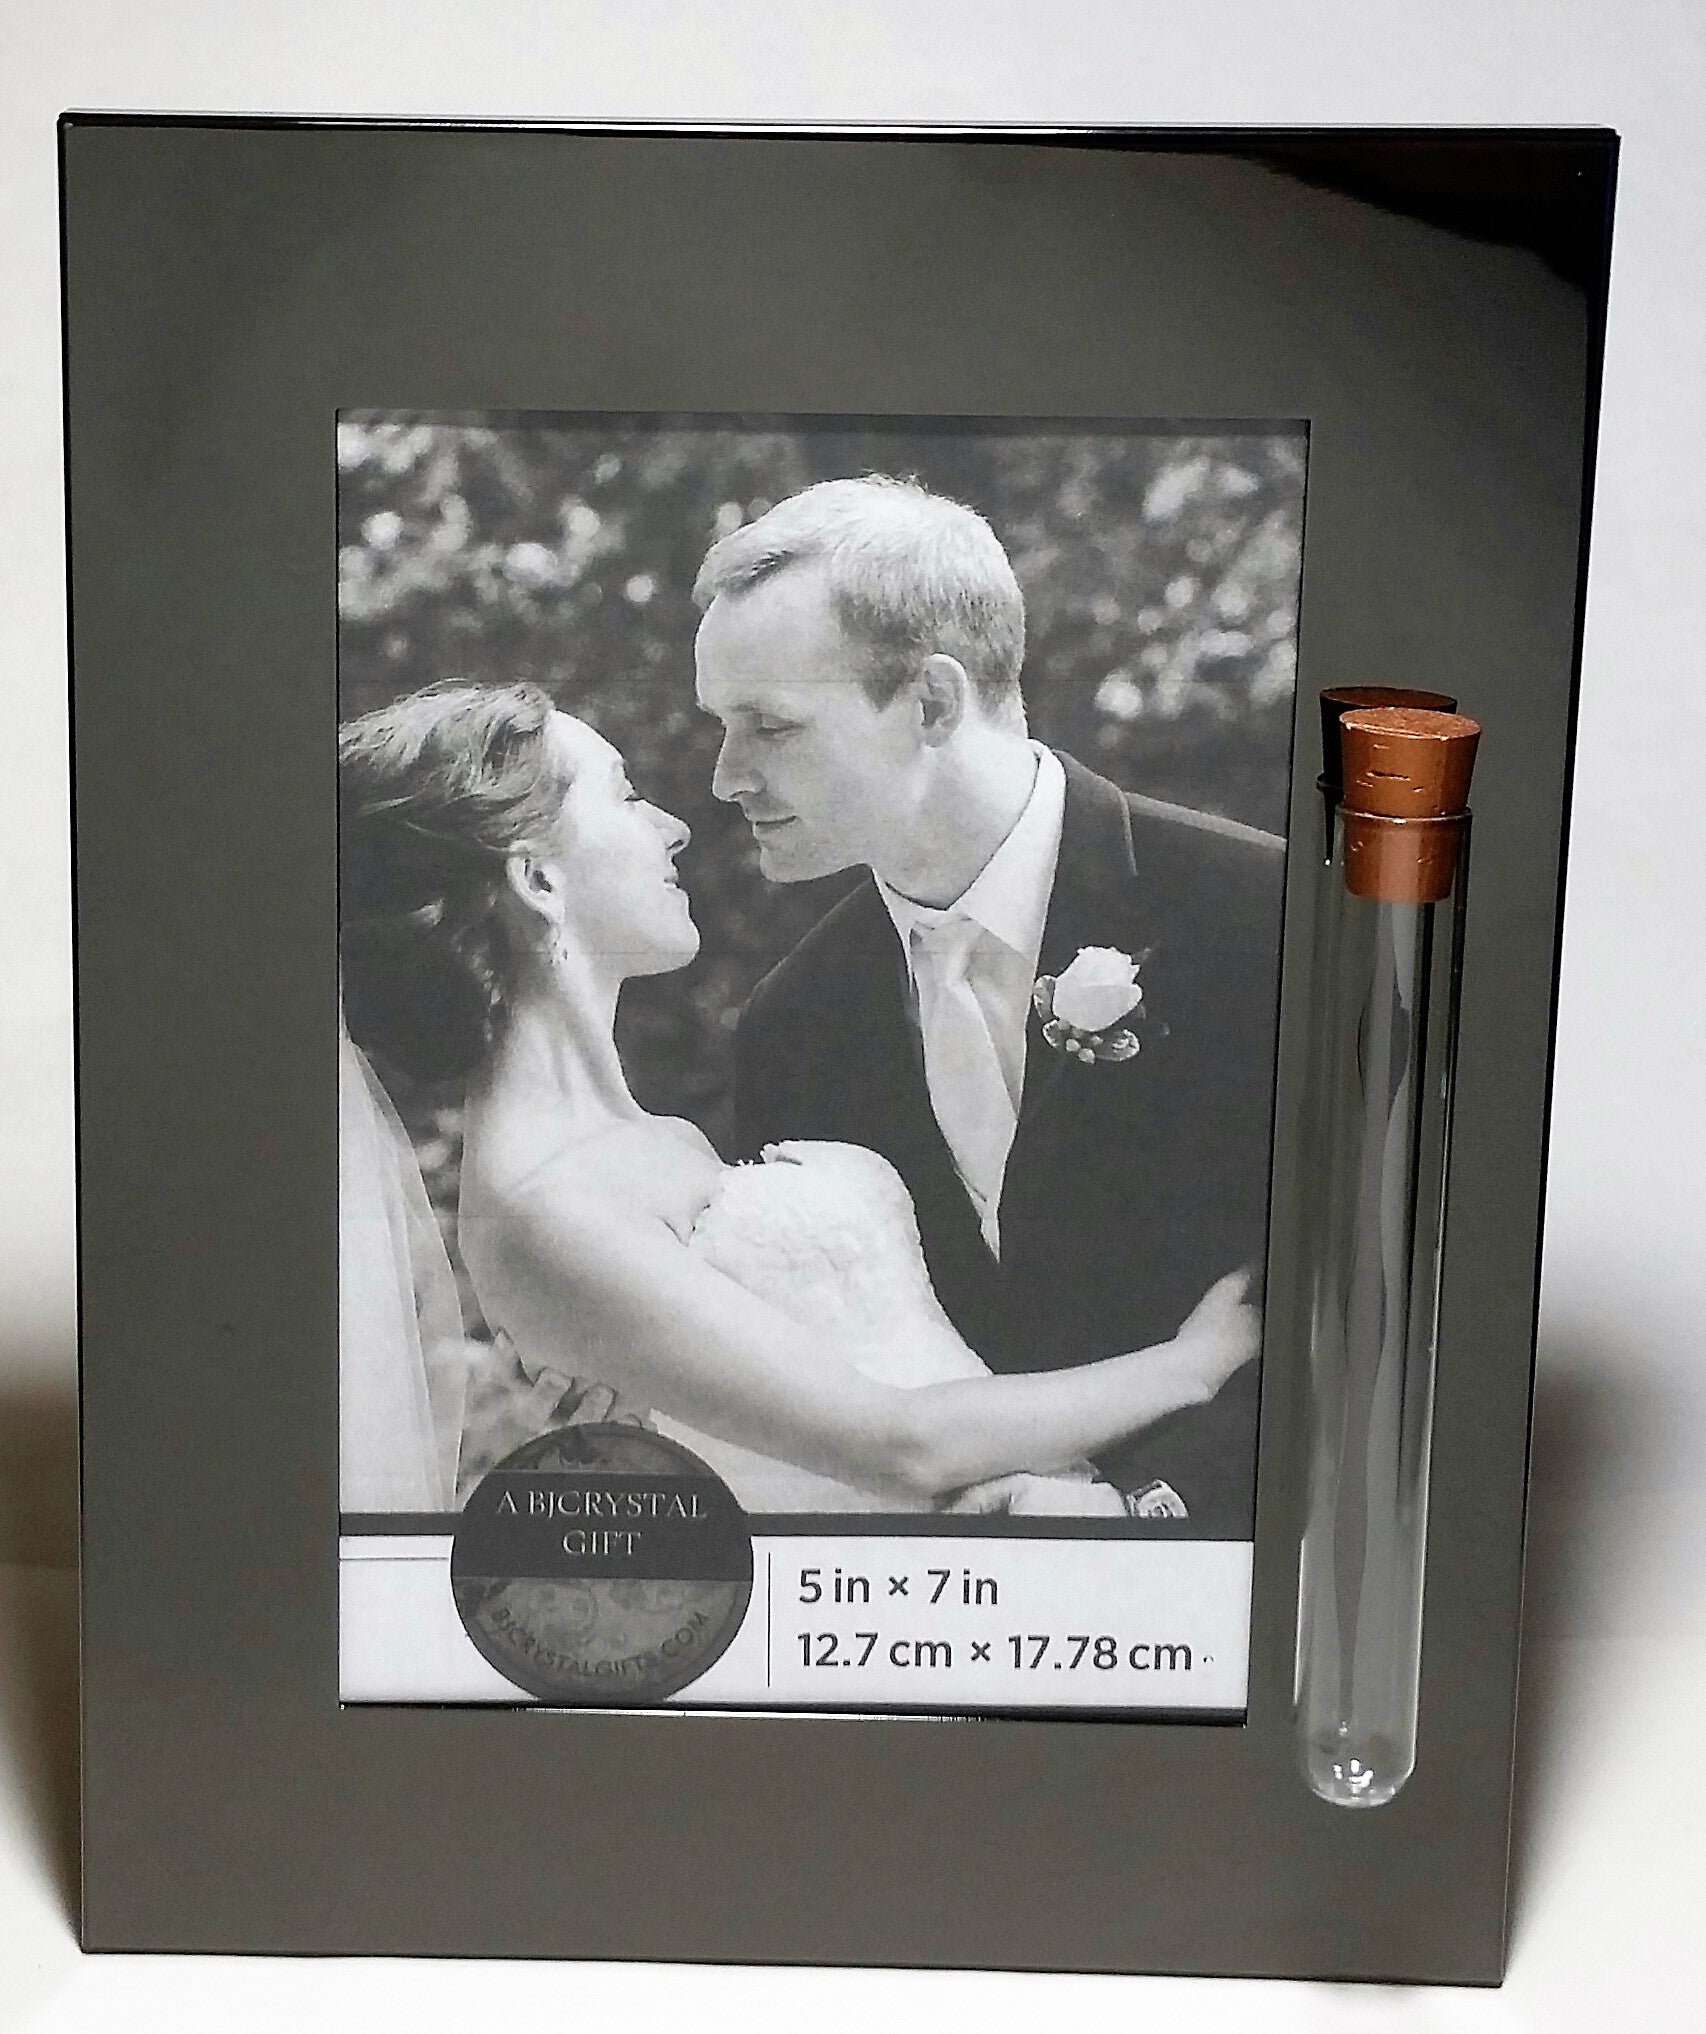 Modern, Sleek Jewish Wedding Picture Frame - Jewish Engagement Gift - Shards From Chuppah